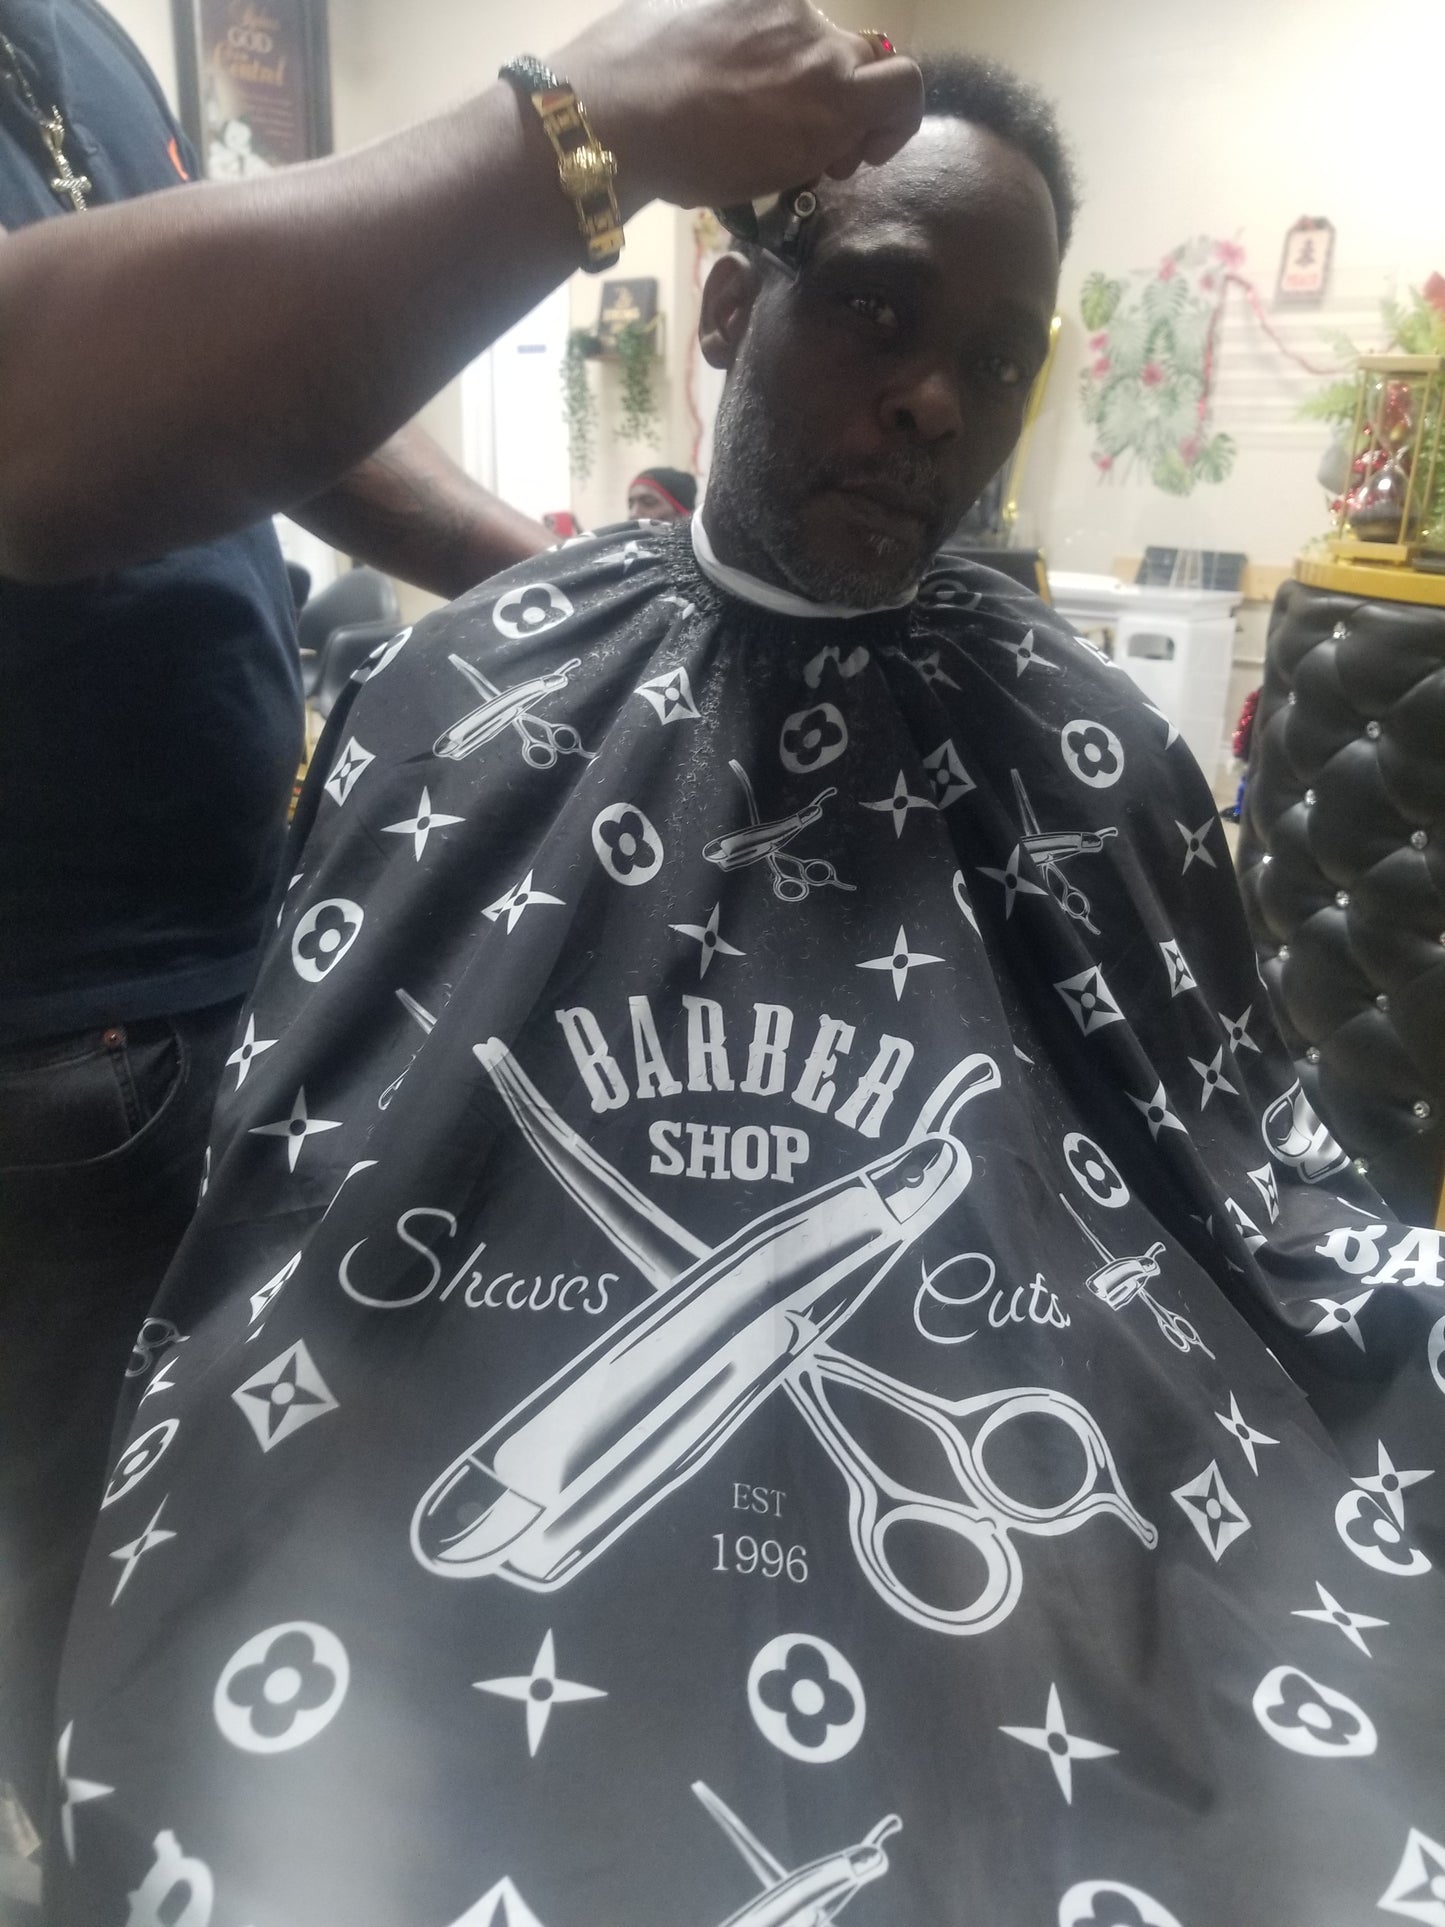 Barber Cape